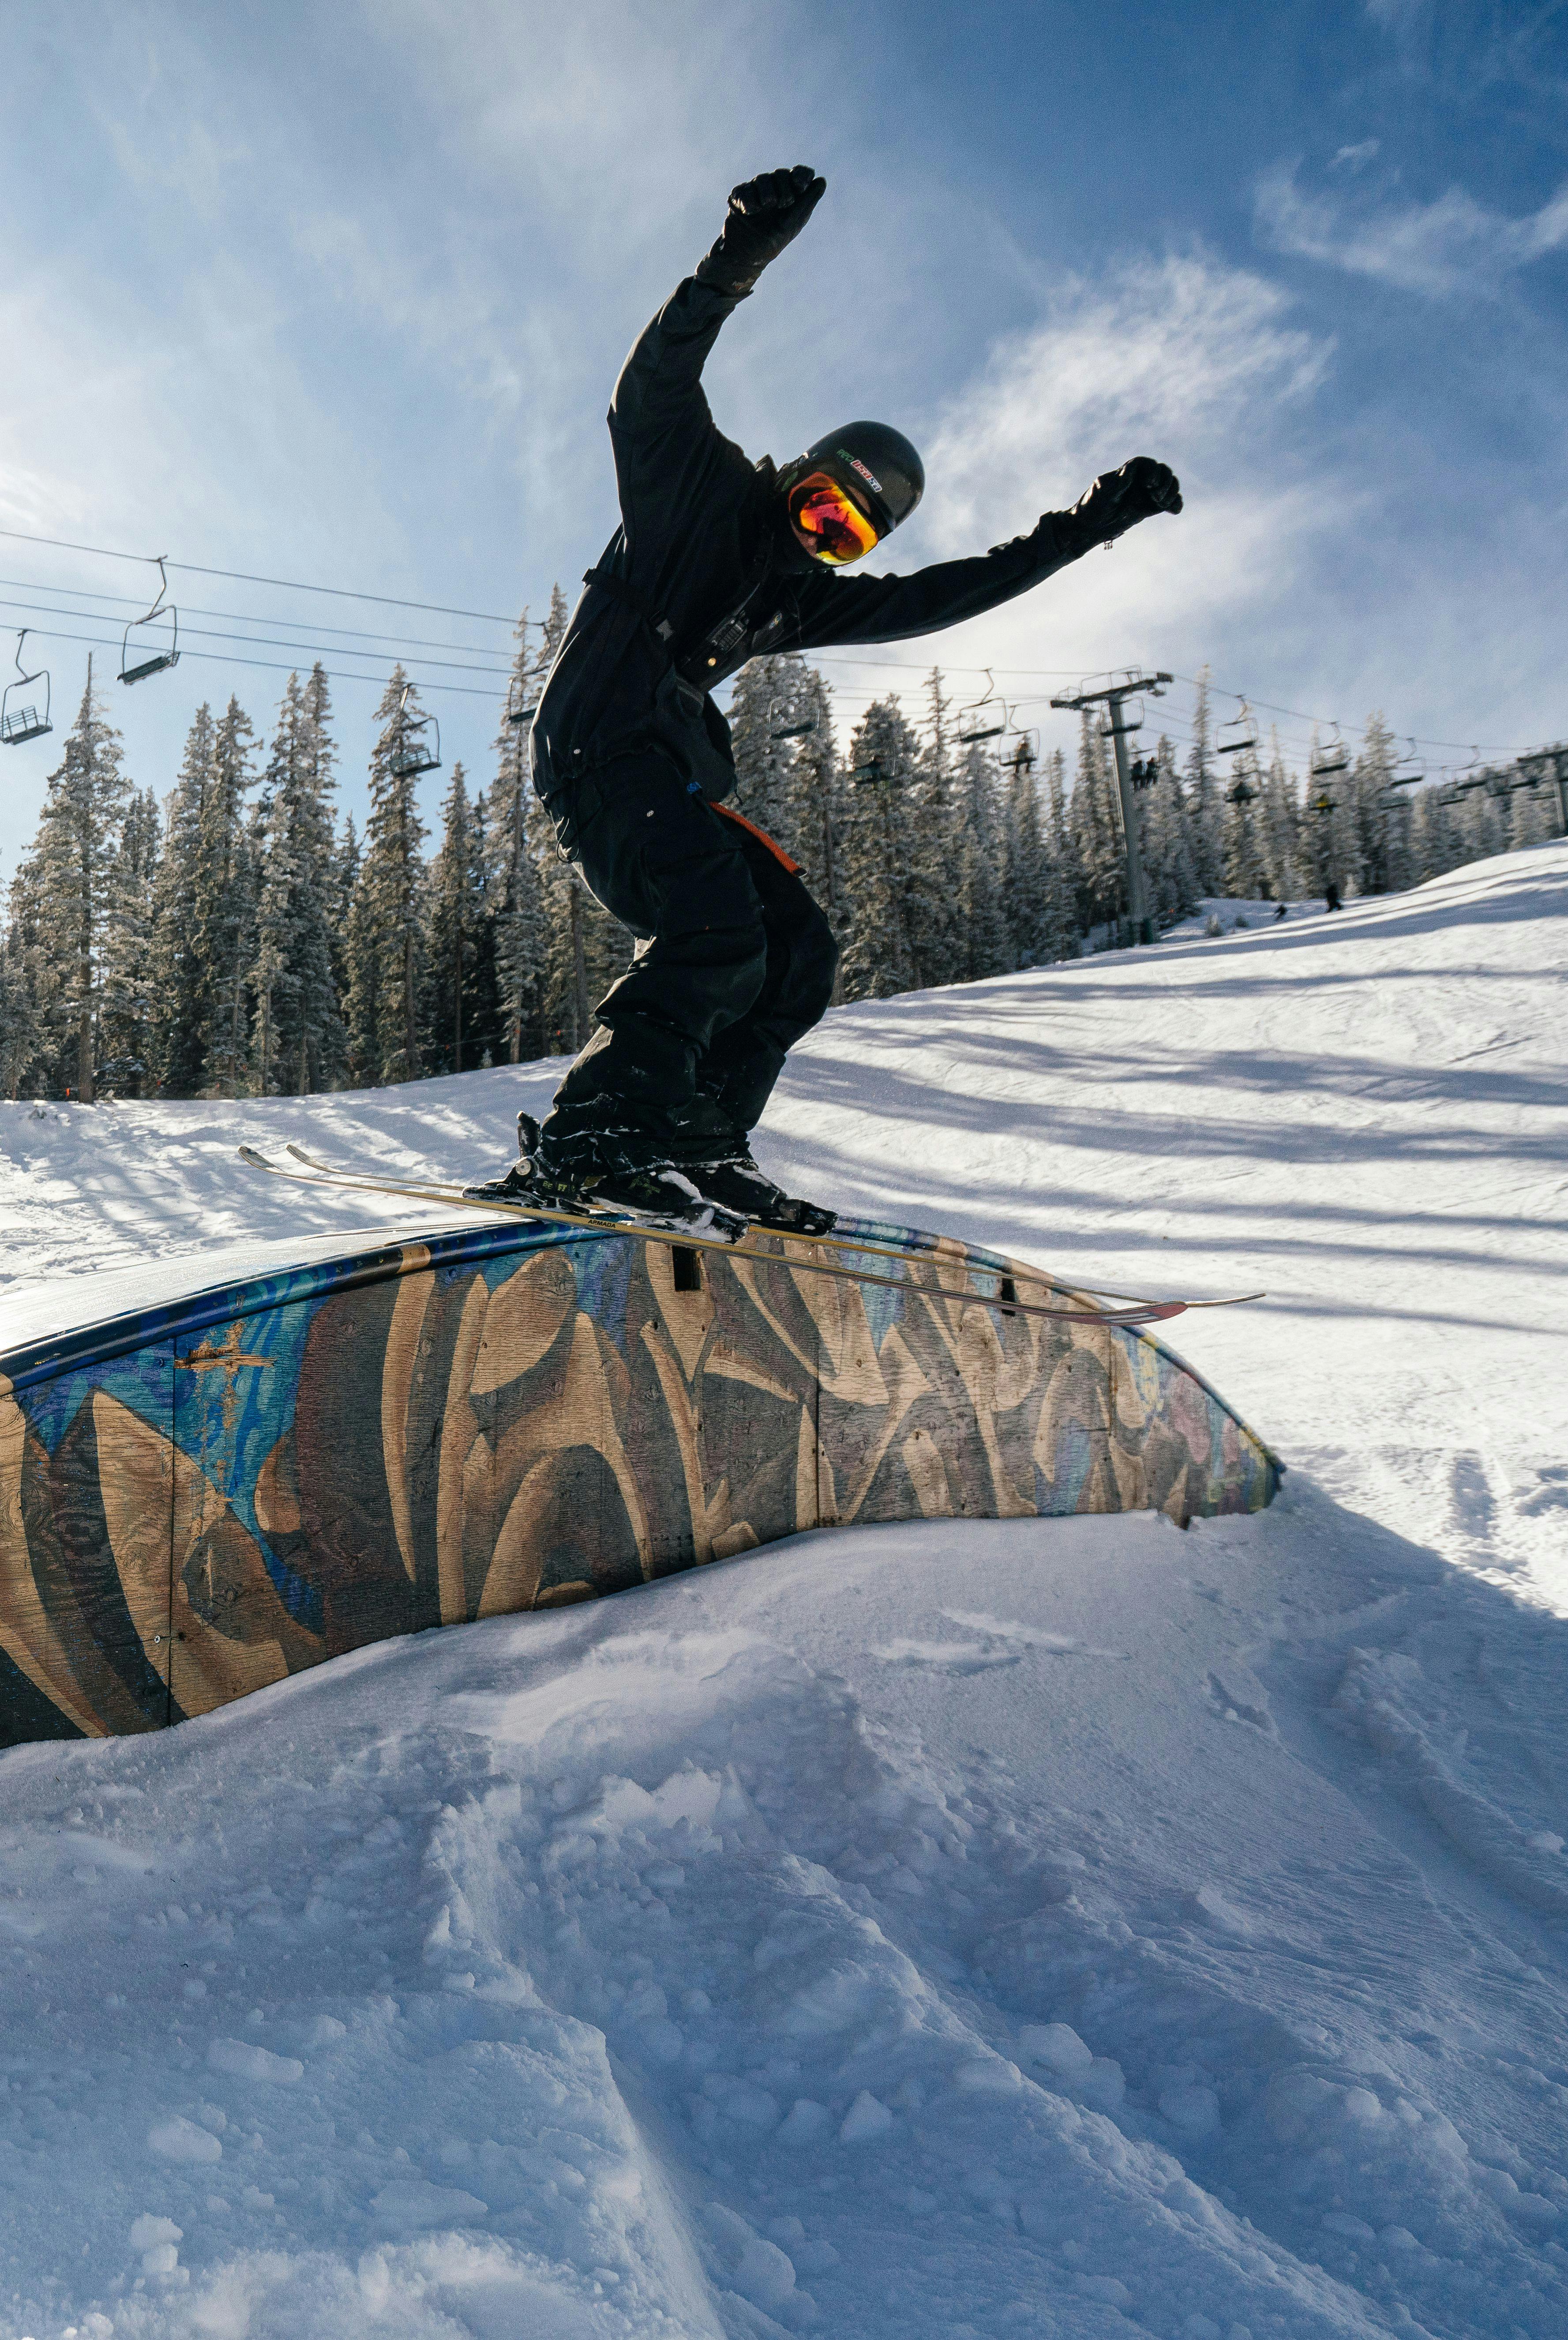 Snowboarder hitting a rail in the terrain park